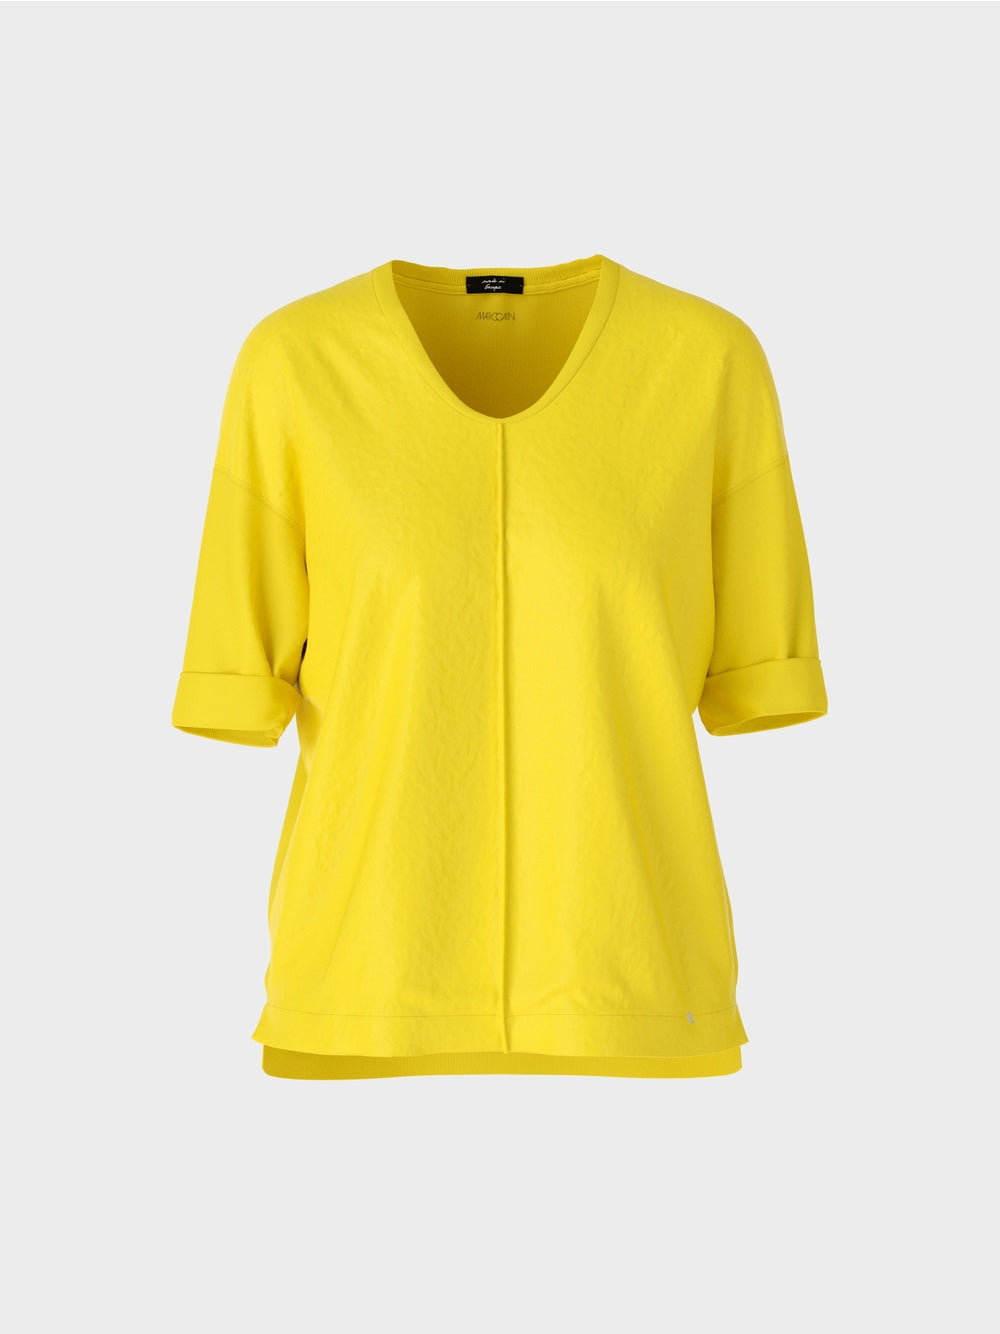 yellow blouse shirt